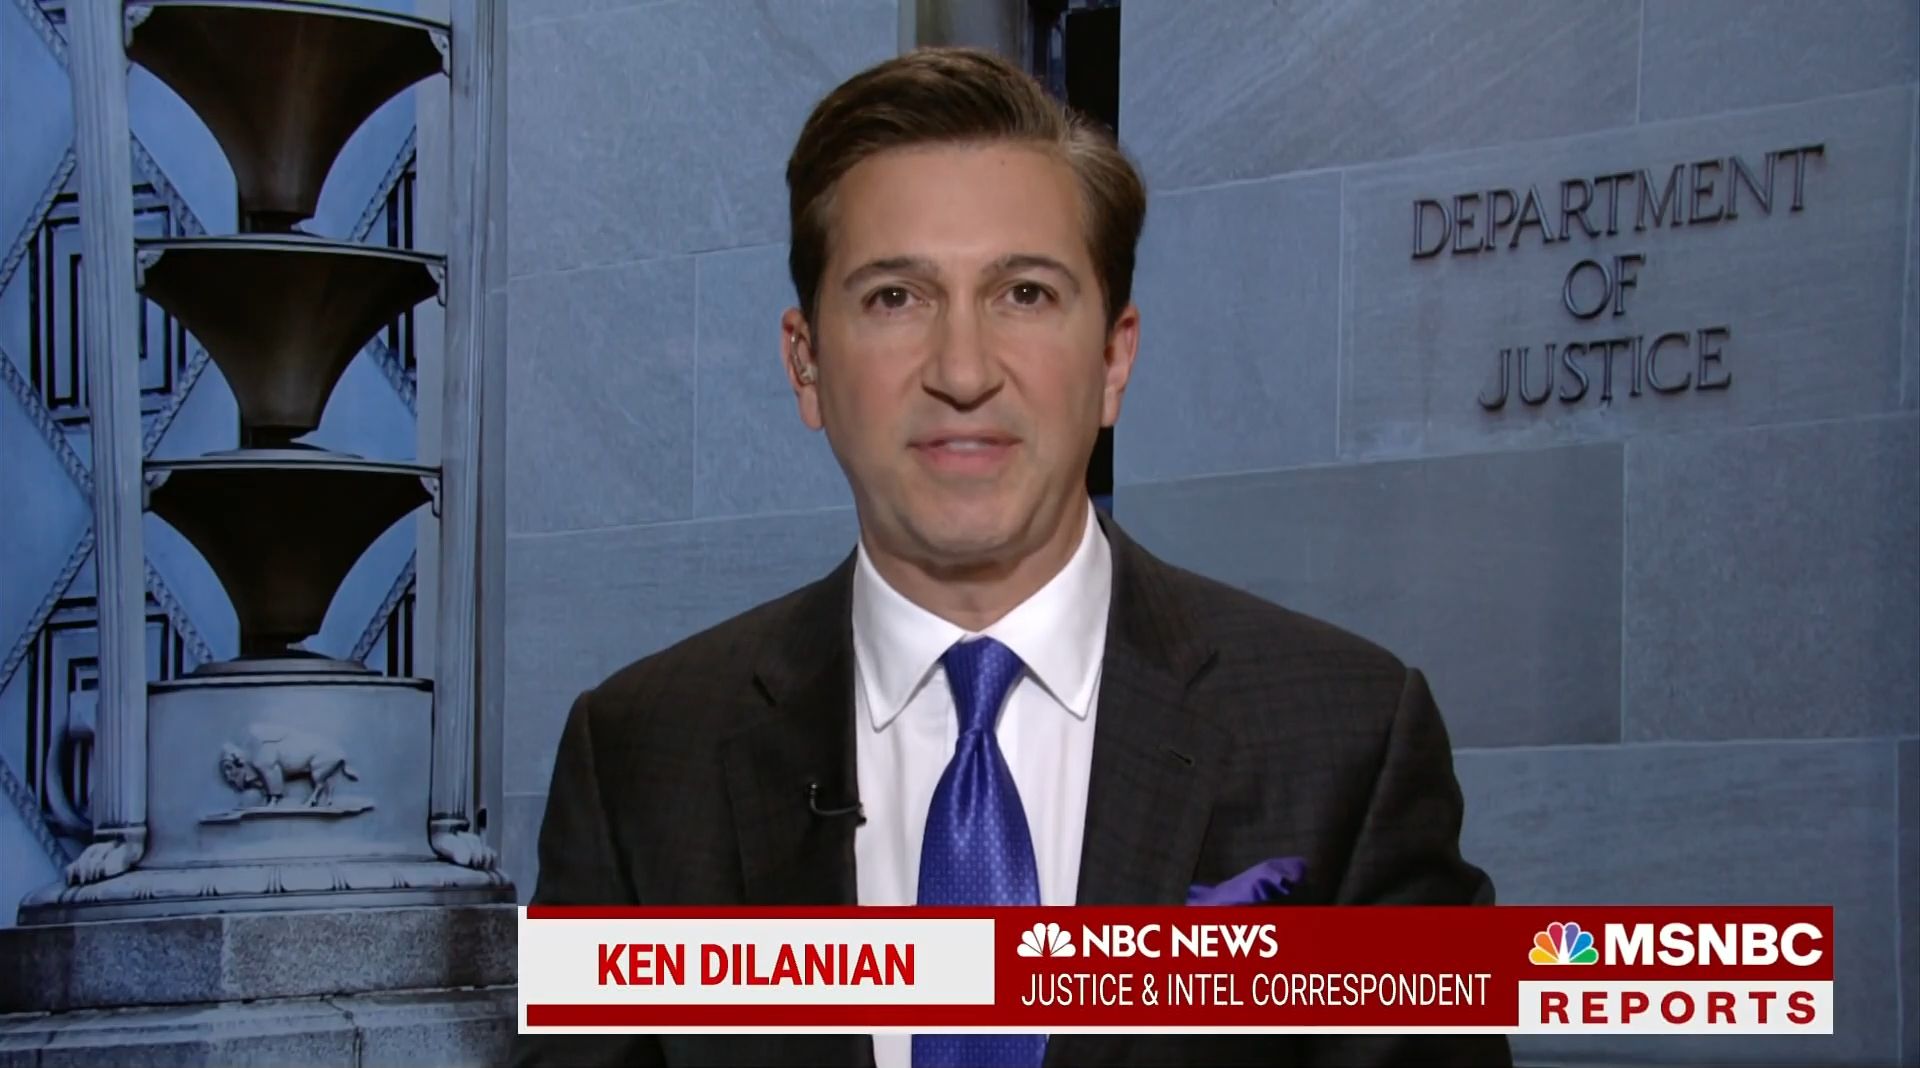 Ken Dilanian on MSNBC